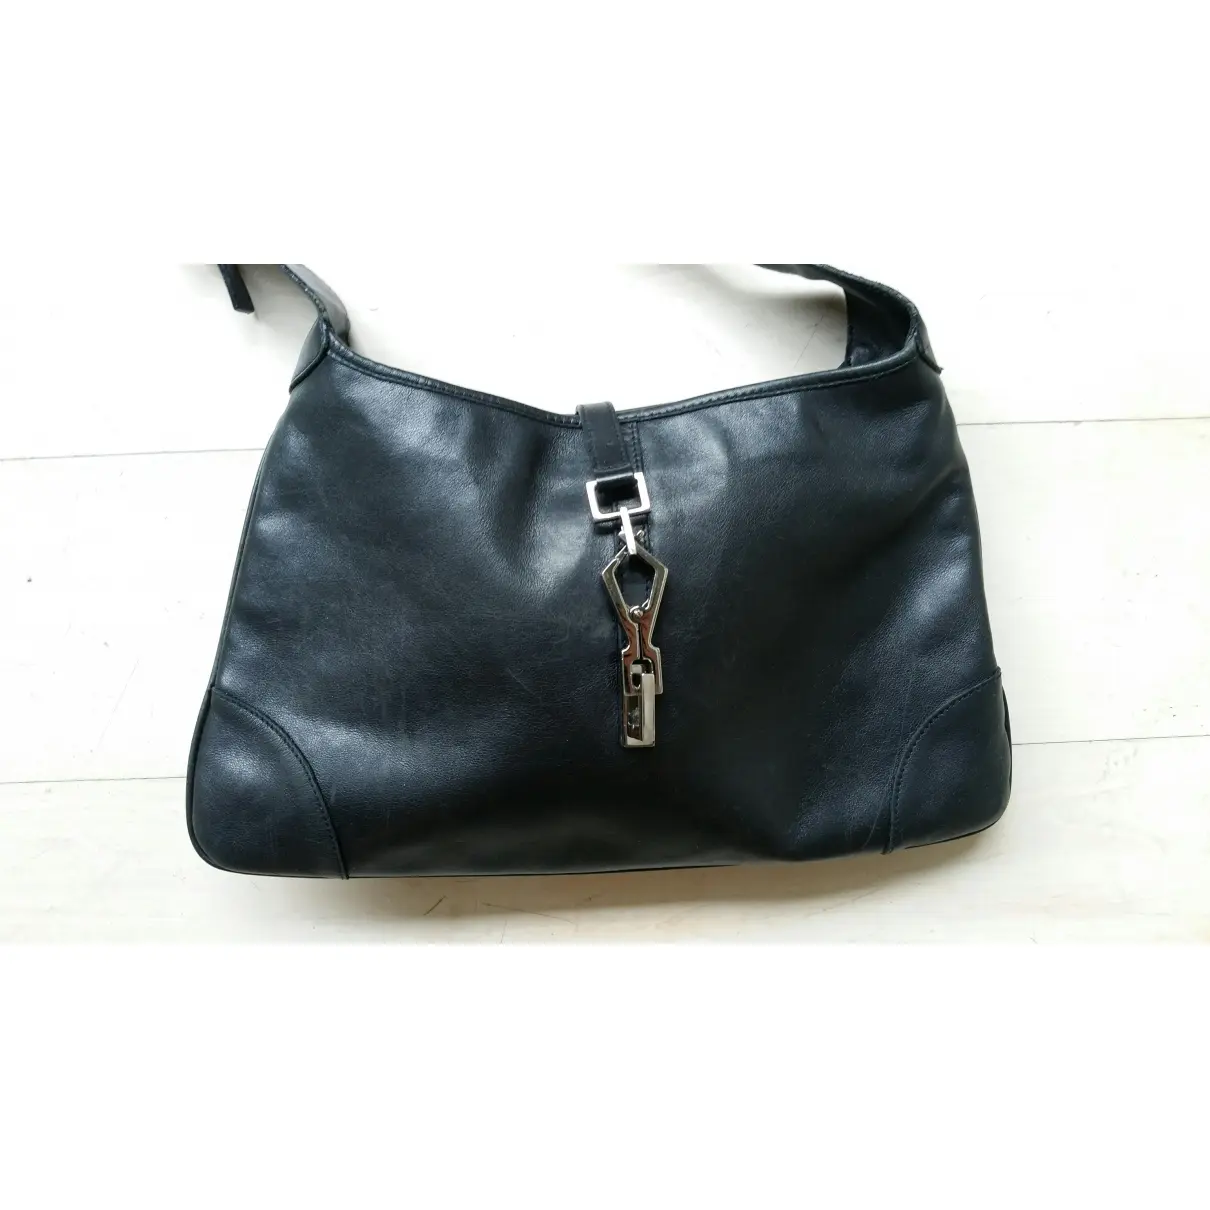 Gucci Black Leather Handbag Jackie for sale